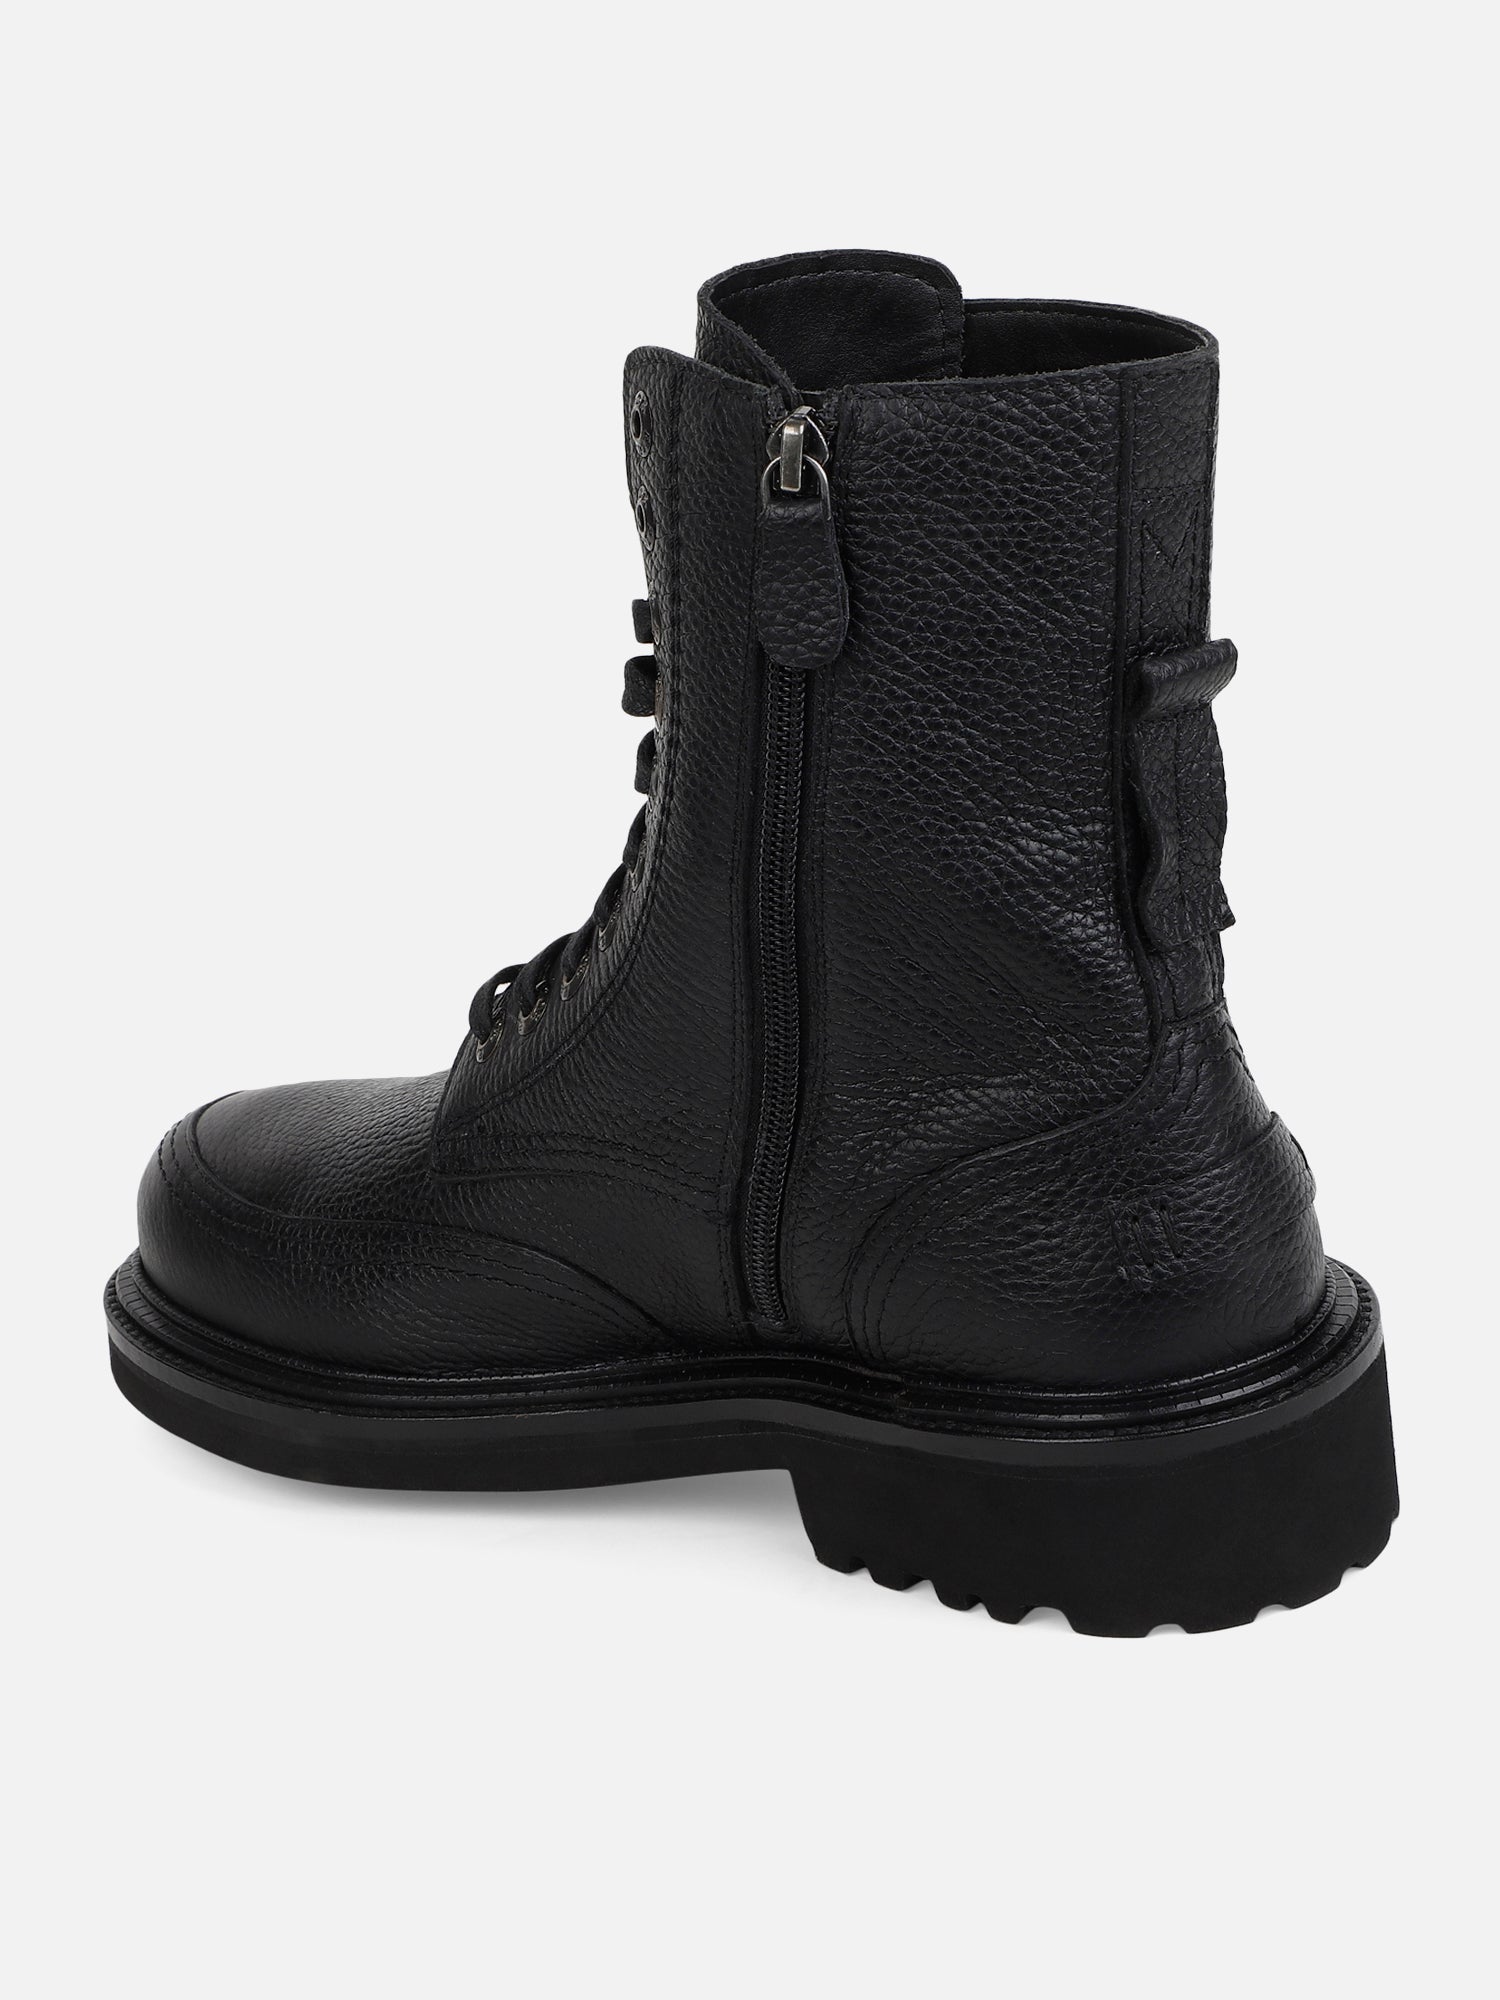 Ezok Black Lace-ups Leather Boot For Men